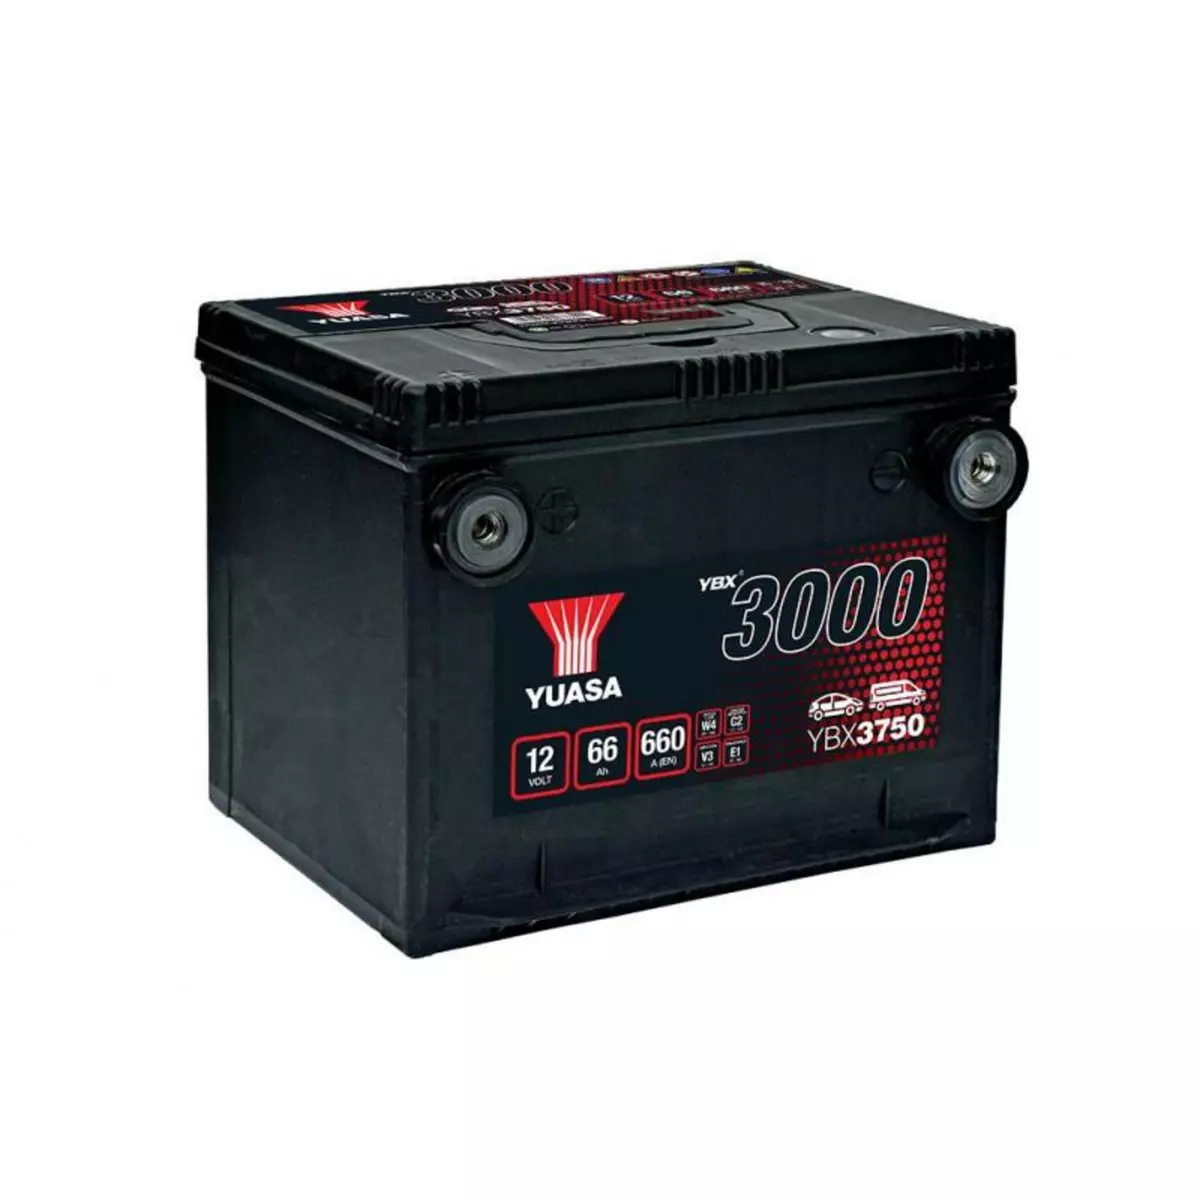 YUASA Batterie voiture américaine Yuasa SMF YBX3750 12V 66ah 660A